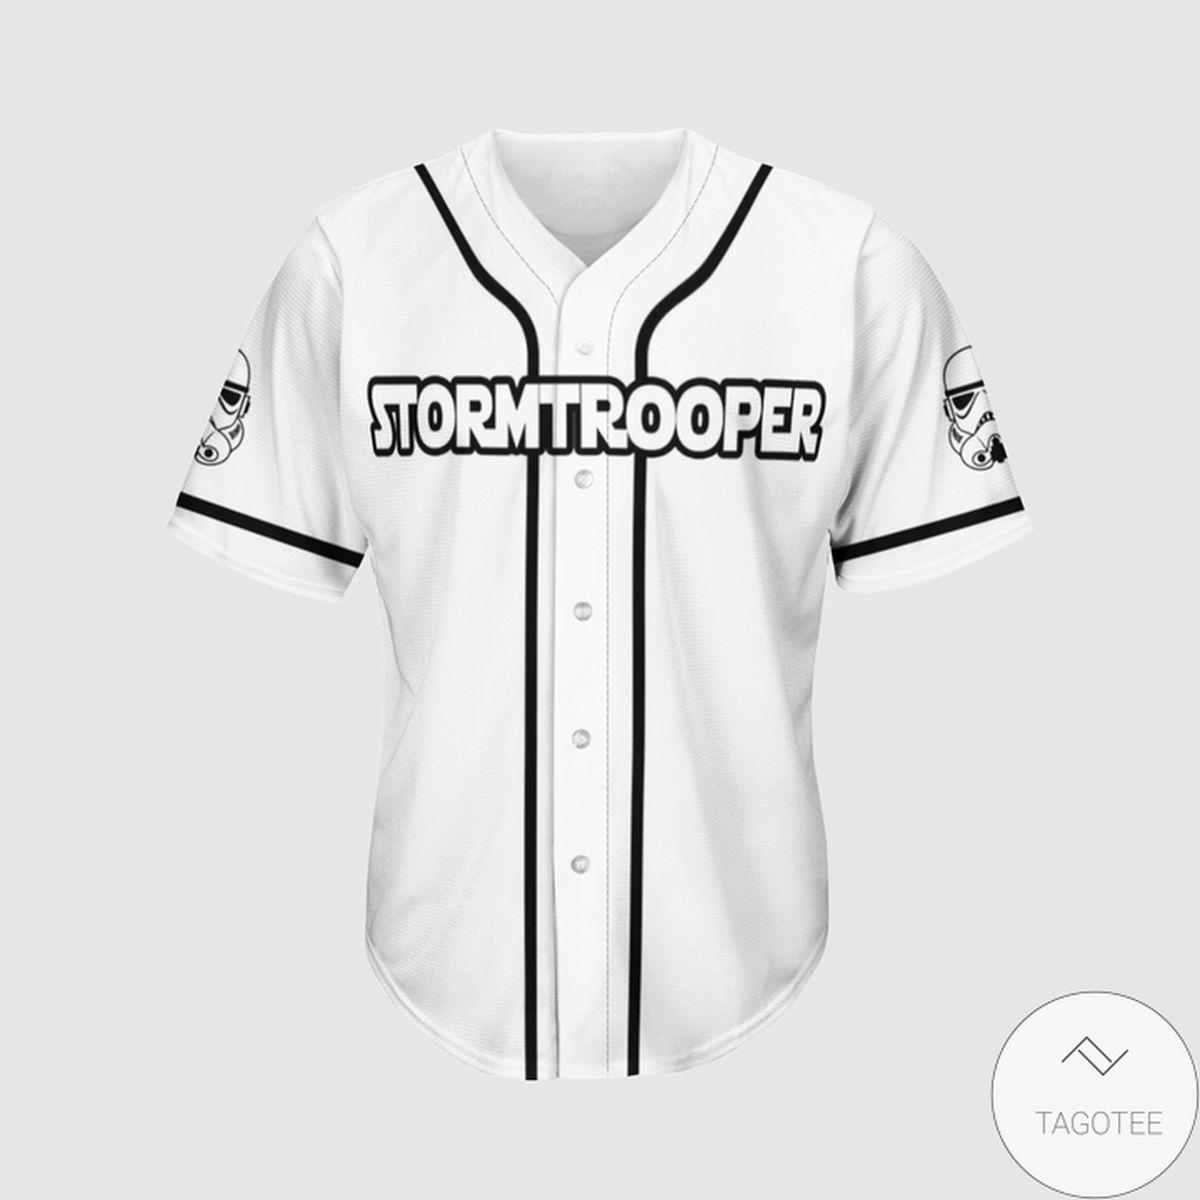 Star Wars Stormtrooper Baseball Jersey